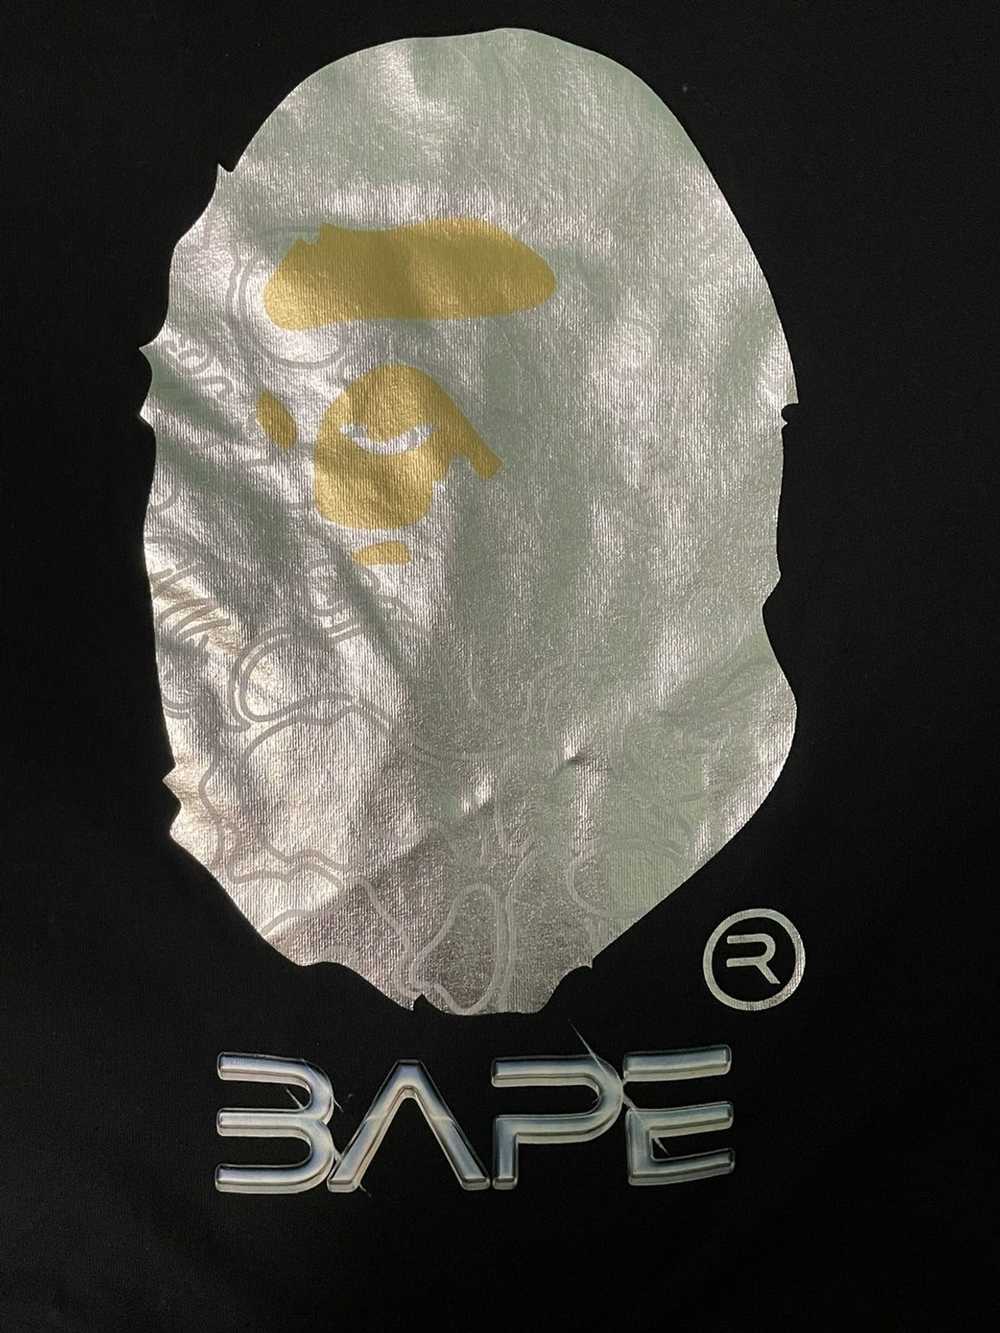 Bape BAPE x Hajime Sorayama Ape Head Tee - image 1